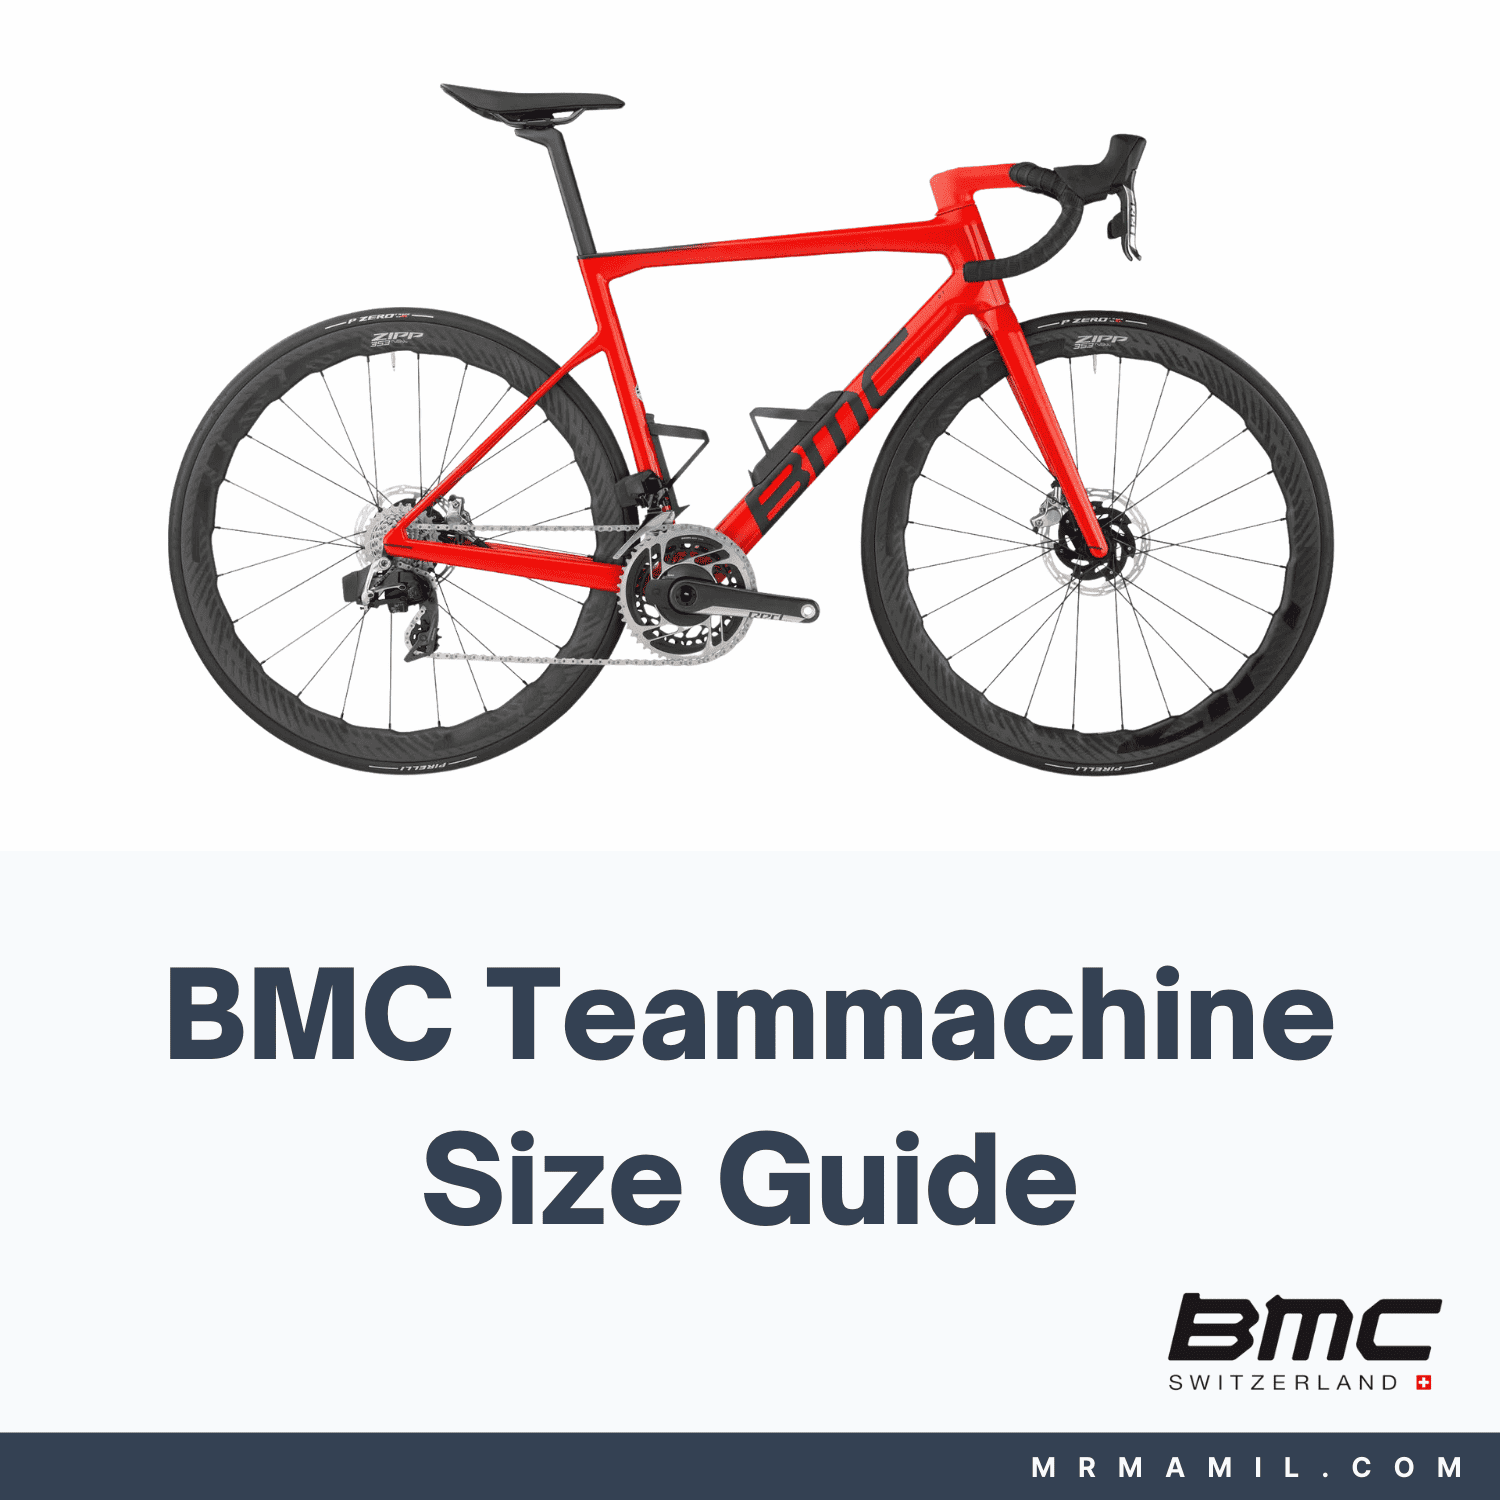 BMC Teammachine Size Guide